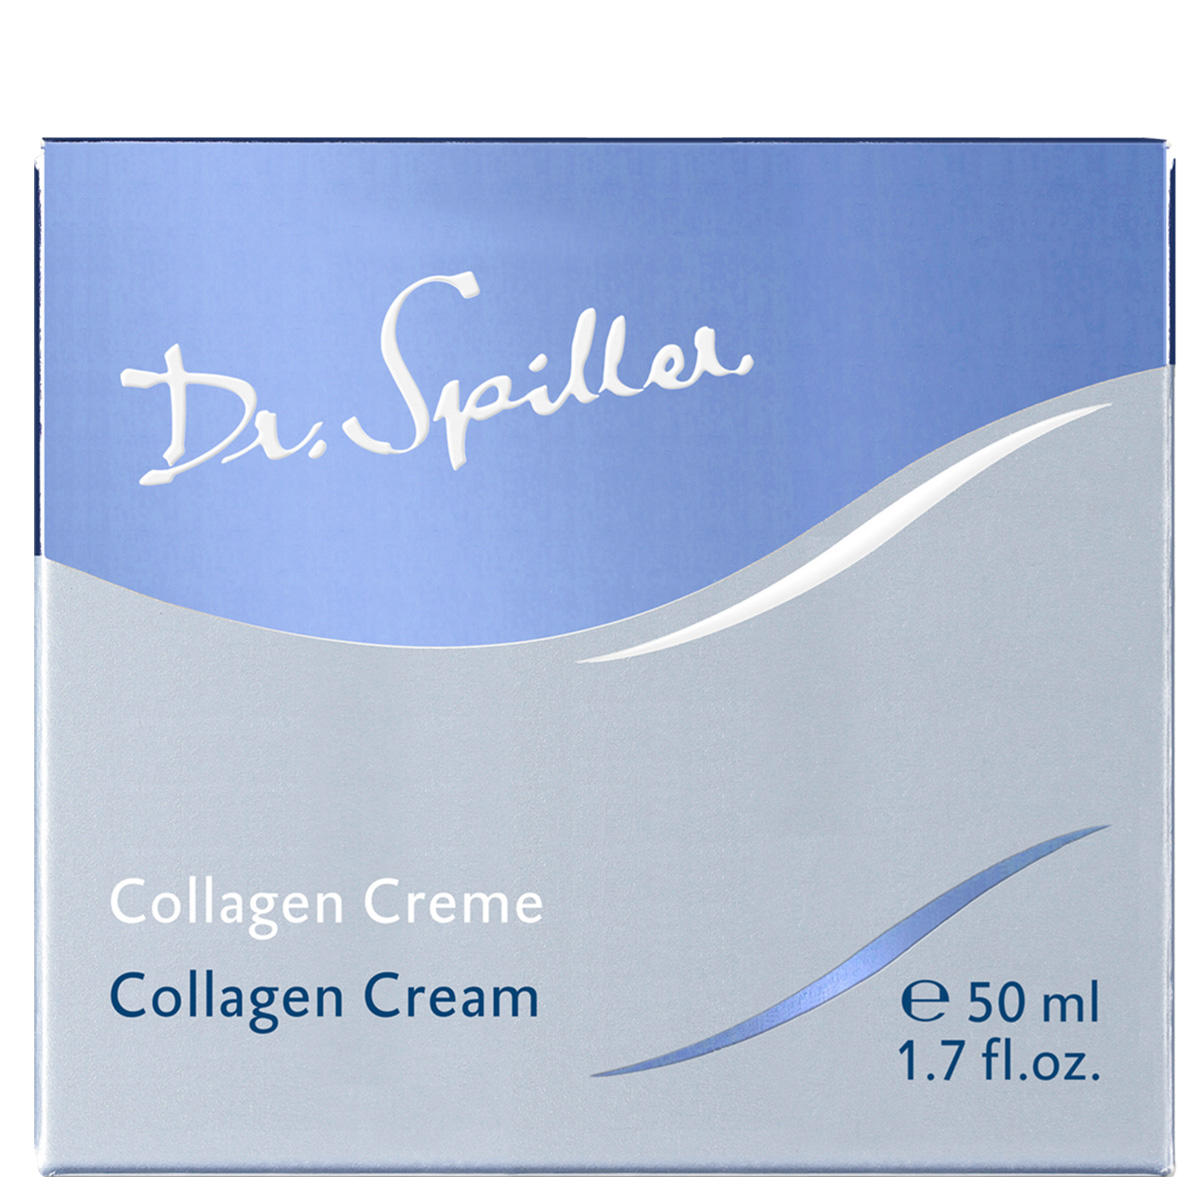 Dr. Spiller Collagen Creme 50 ml - 3